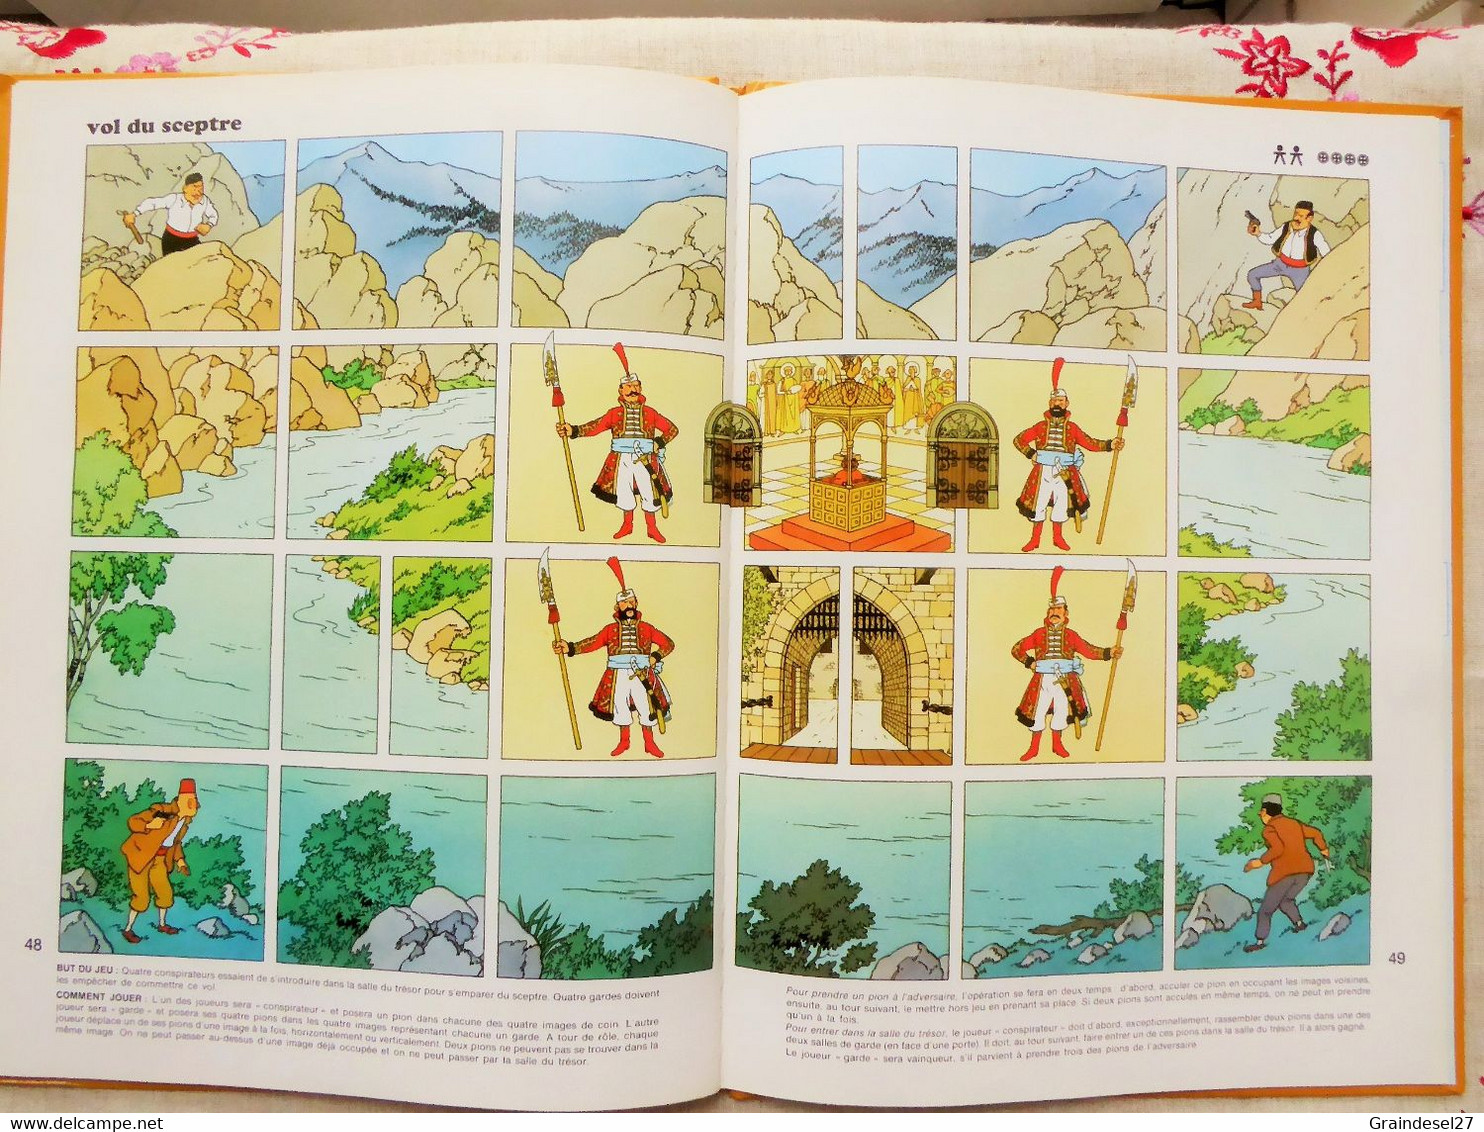 Album de jeu "Jouons avec Tintin" Hergé 1991. Etat neuf